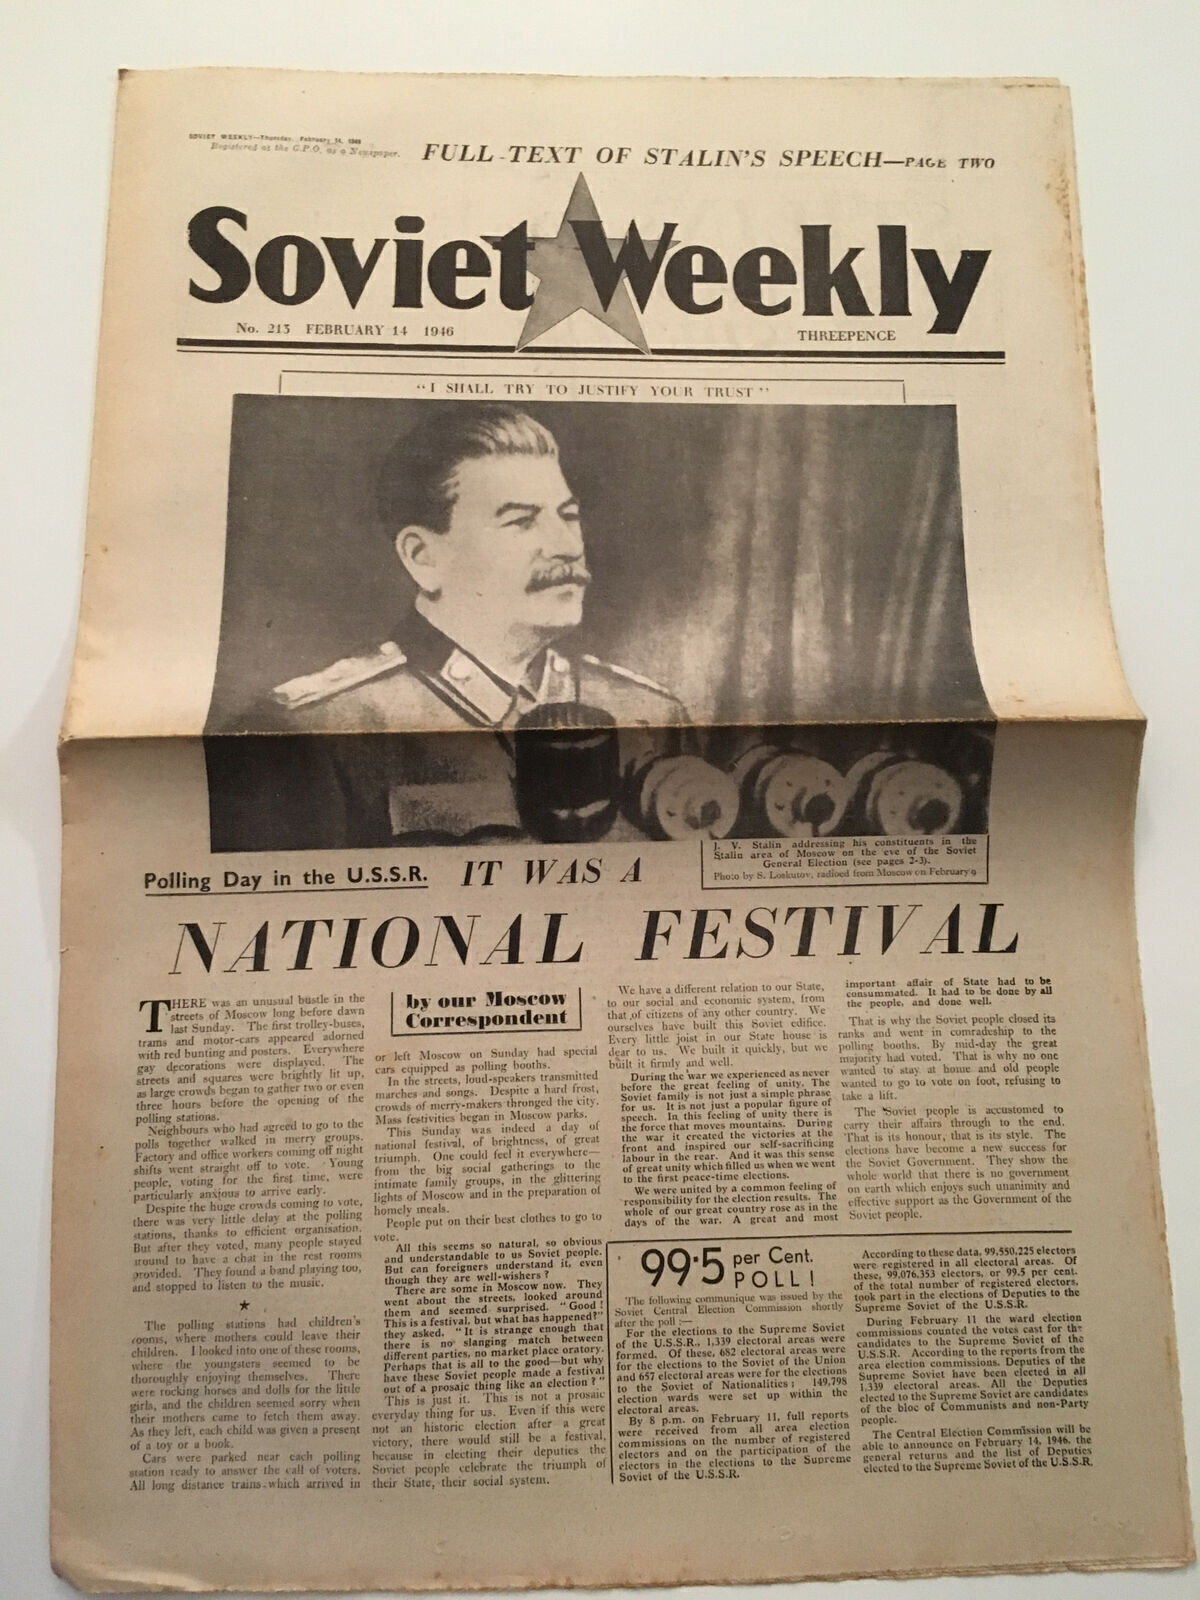 KL) USSR Soviet Weekly Newspaper Joseph Stalin Polling Day February 14 1946